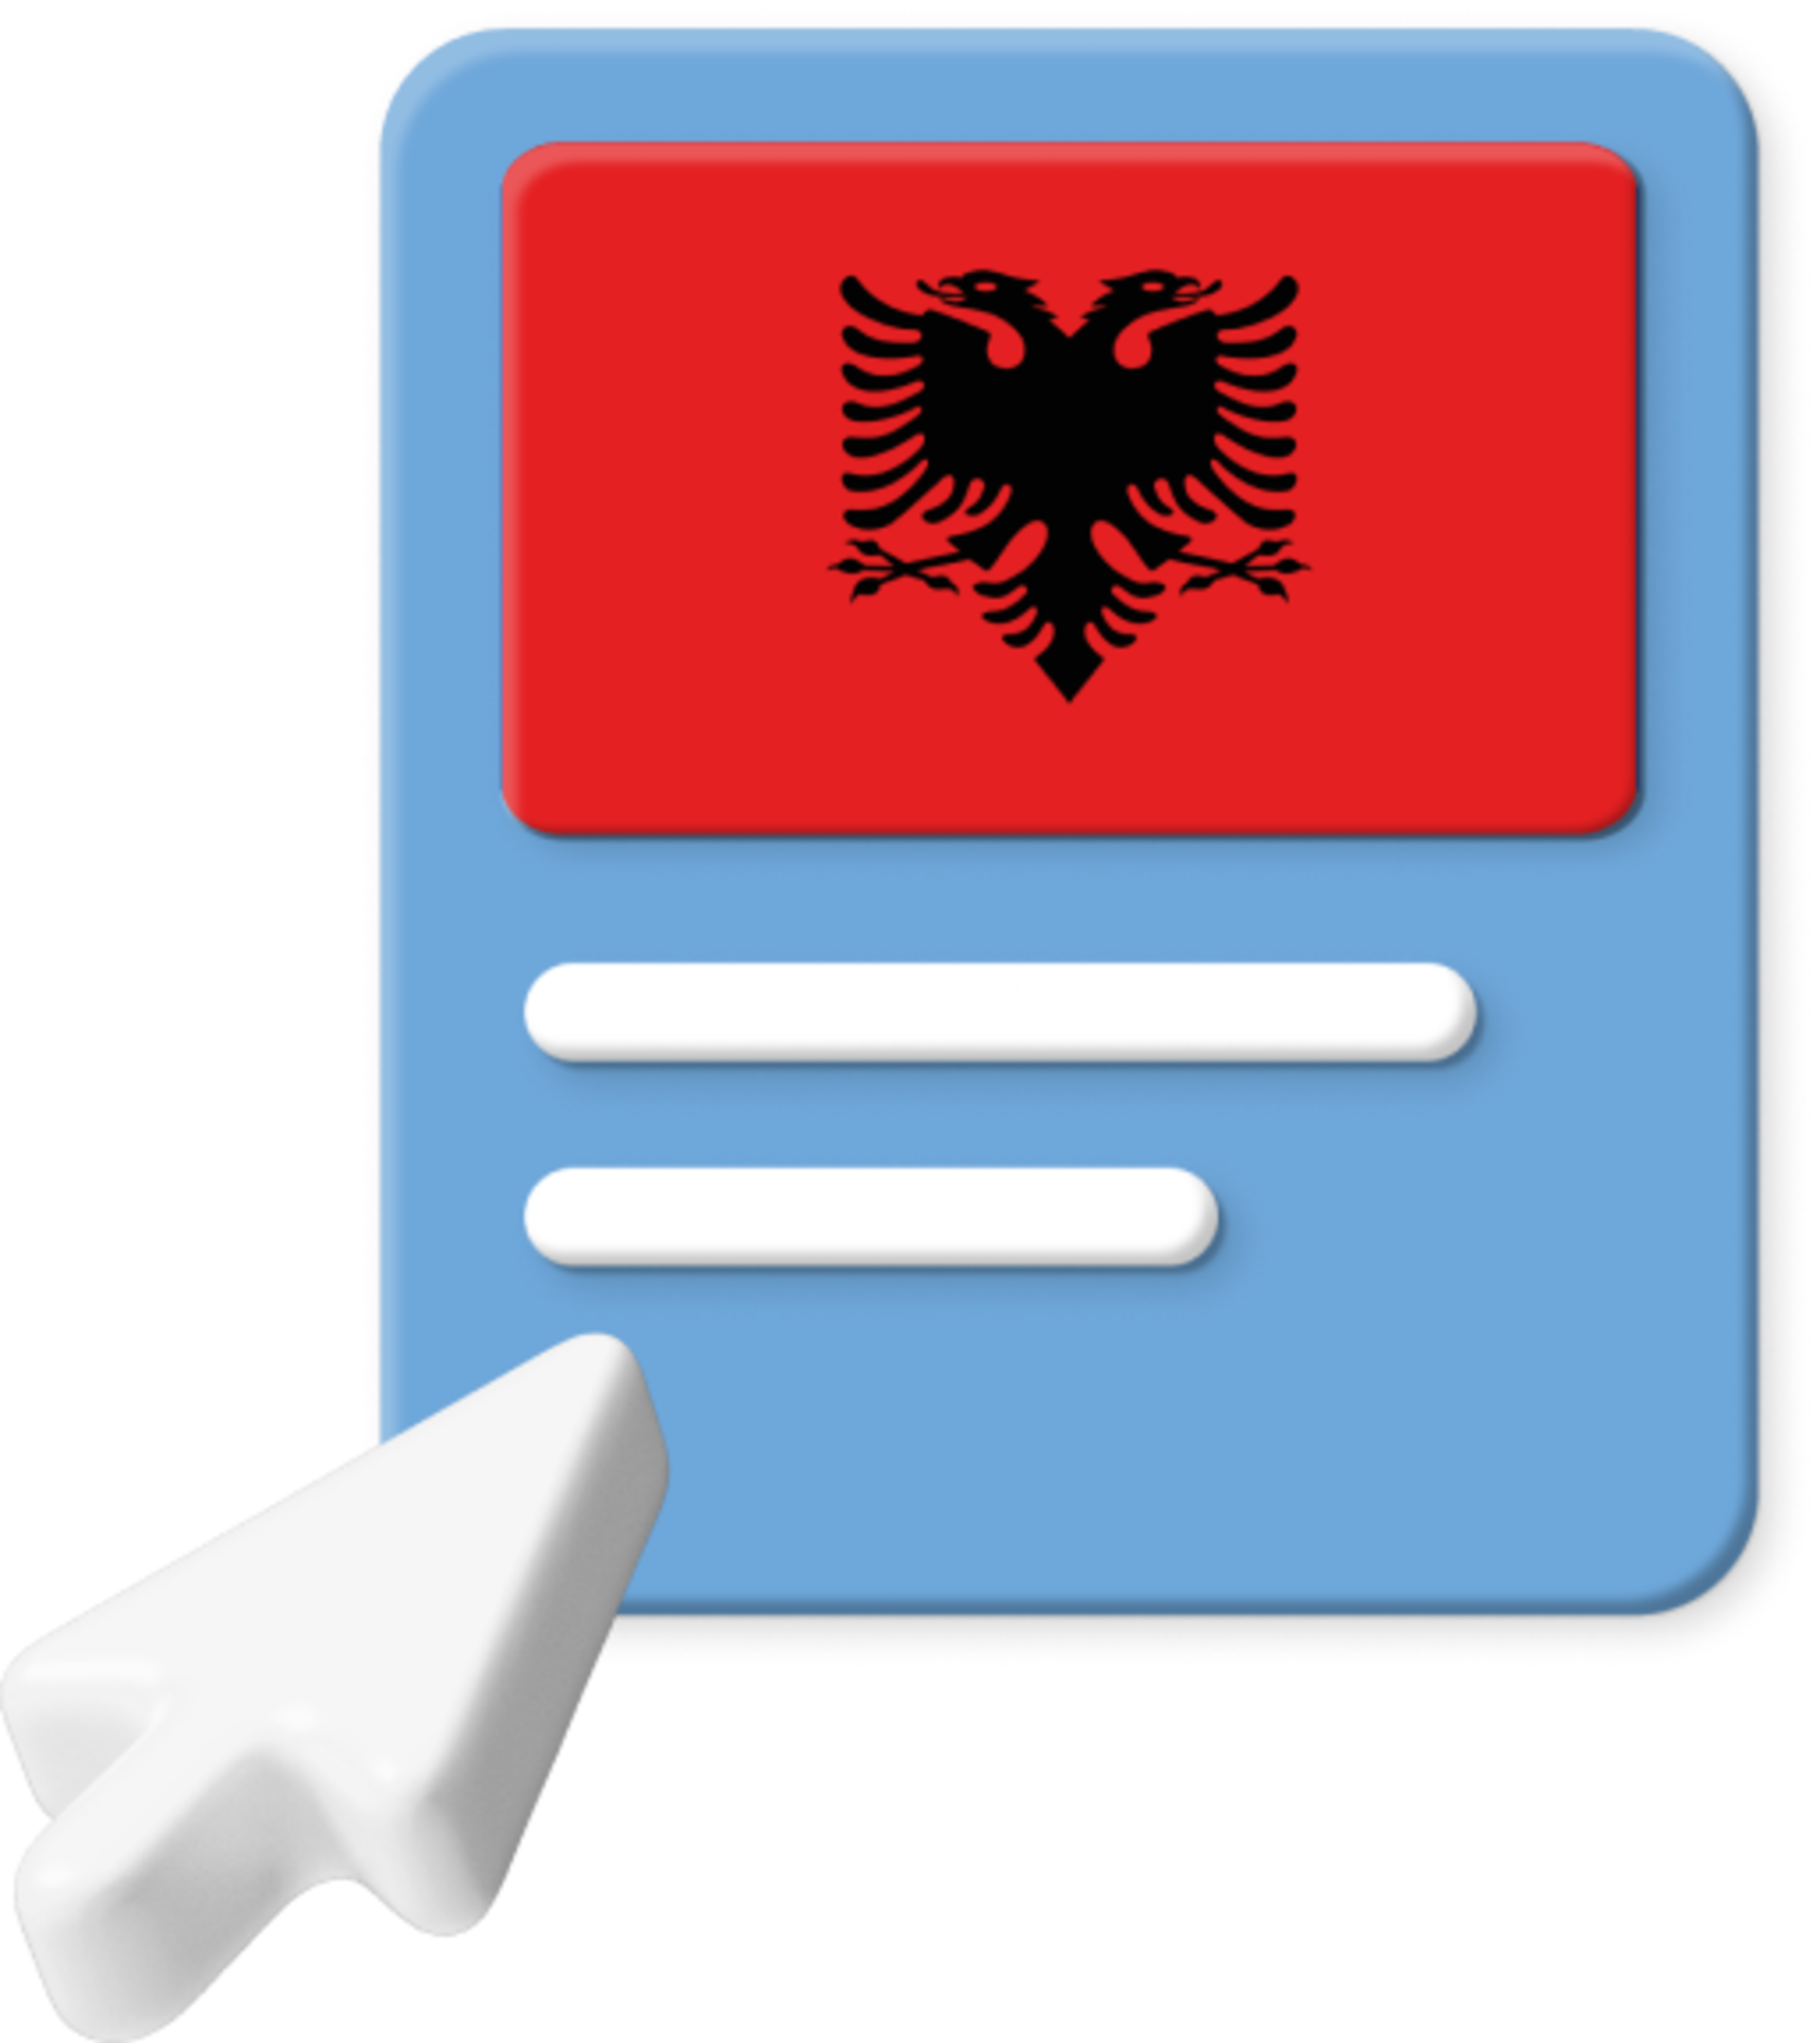 Albania flag with large cursor icon